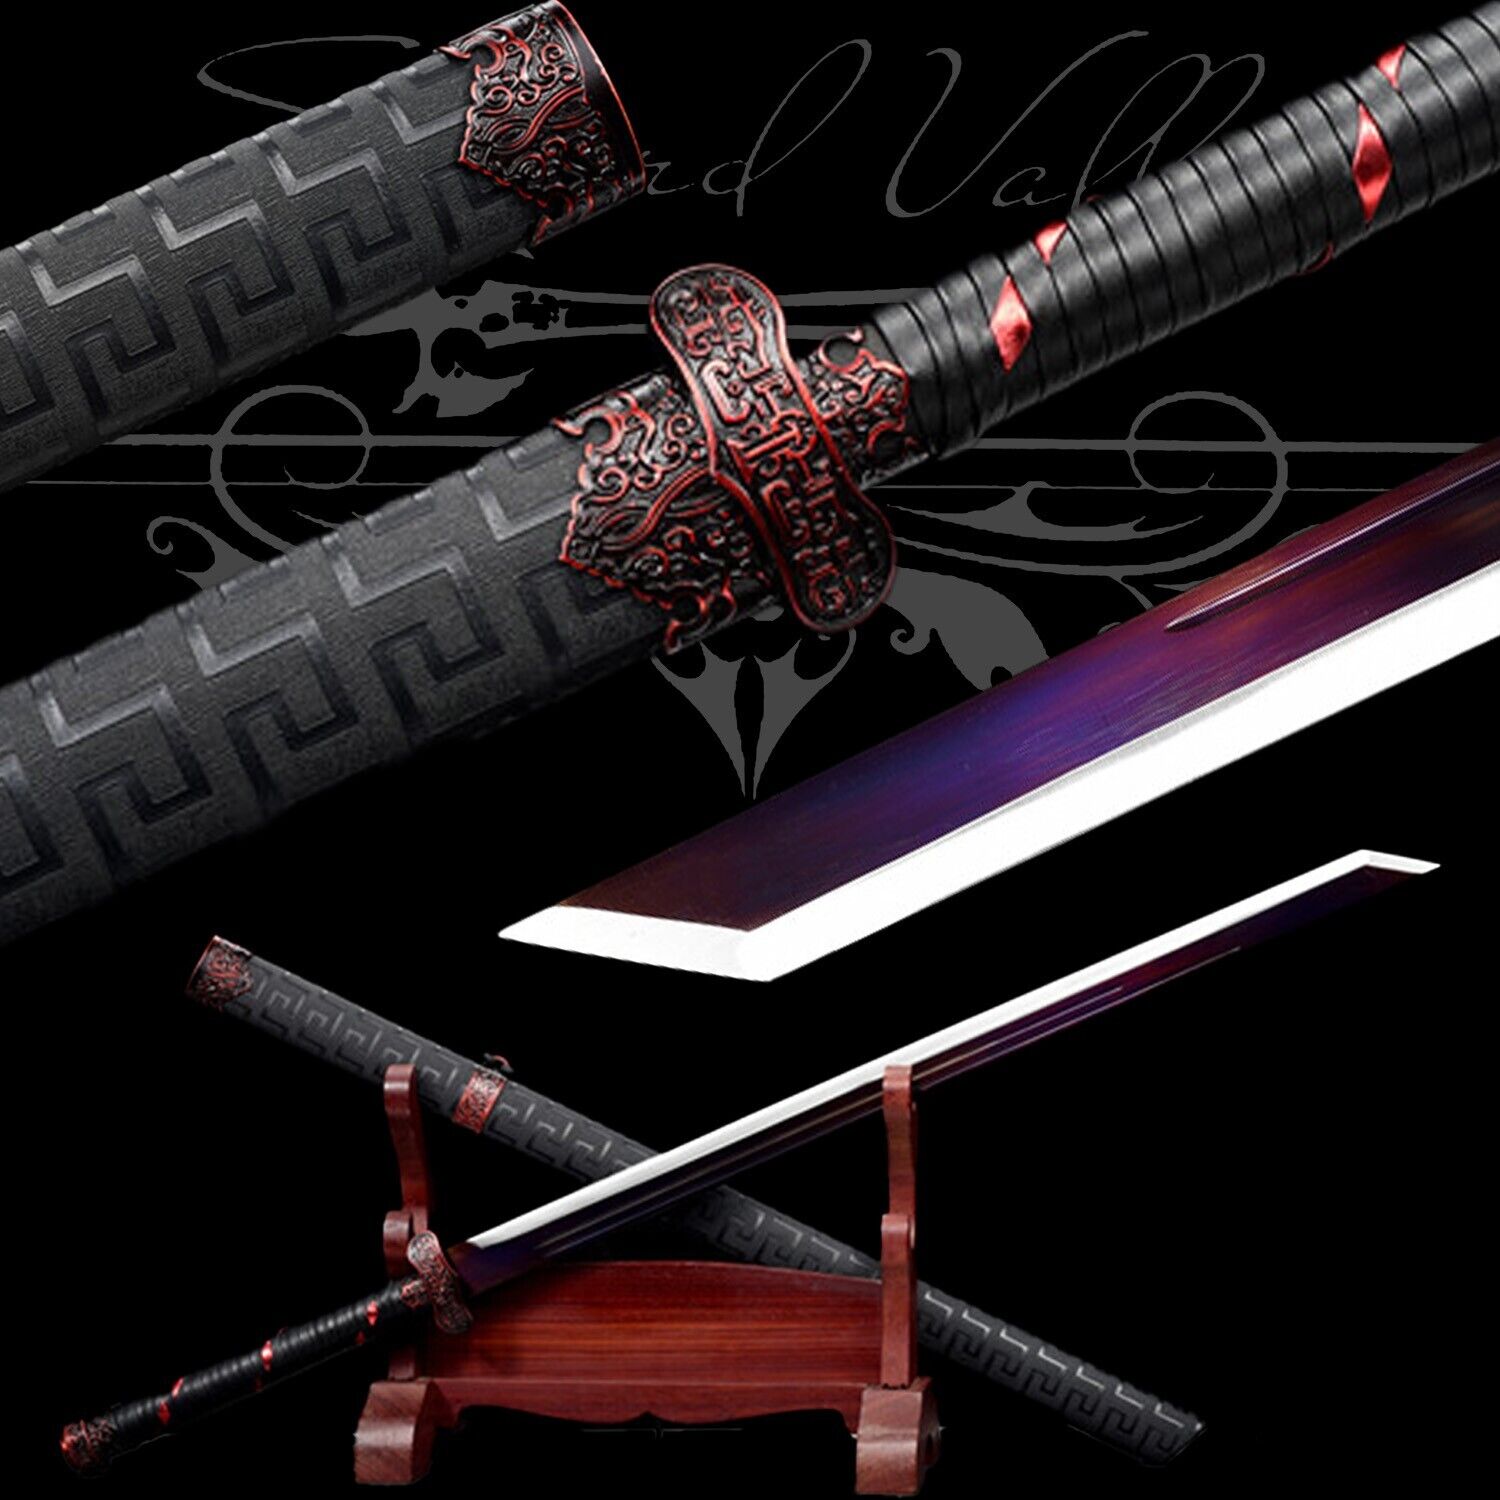 Handmade Katana/Manganese Steel/Real Collectible Sword/High-Quality Blade/Sharp